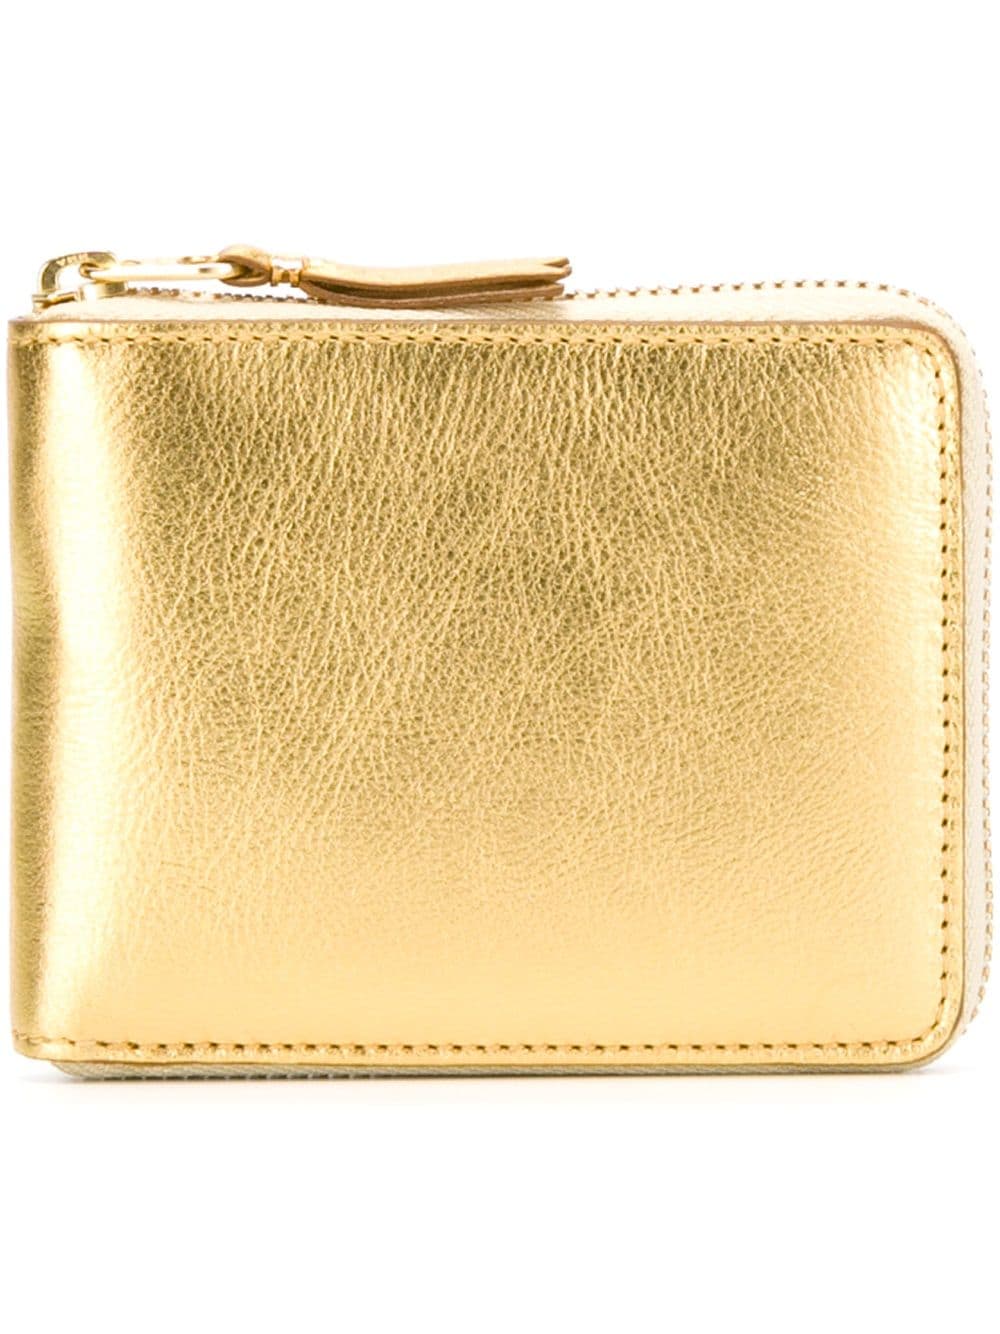 Comme Des Garçons Wallet 'Gold Line' wallet - Metallic von Comme Des Garçons Wallet